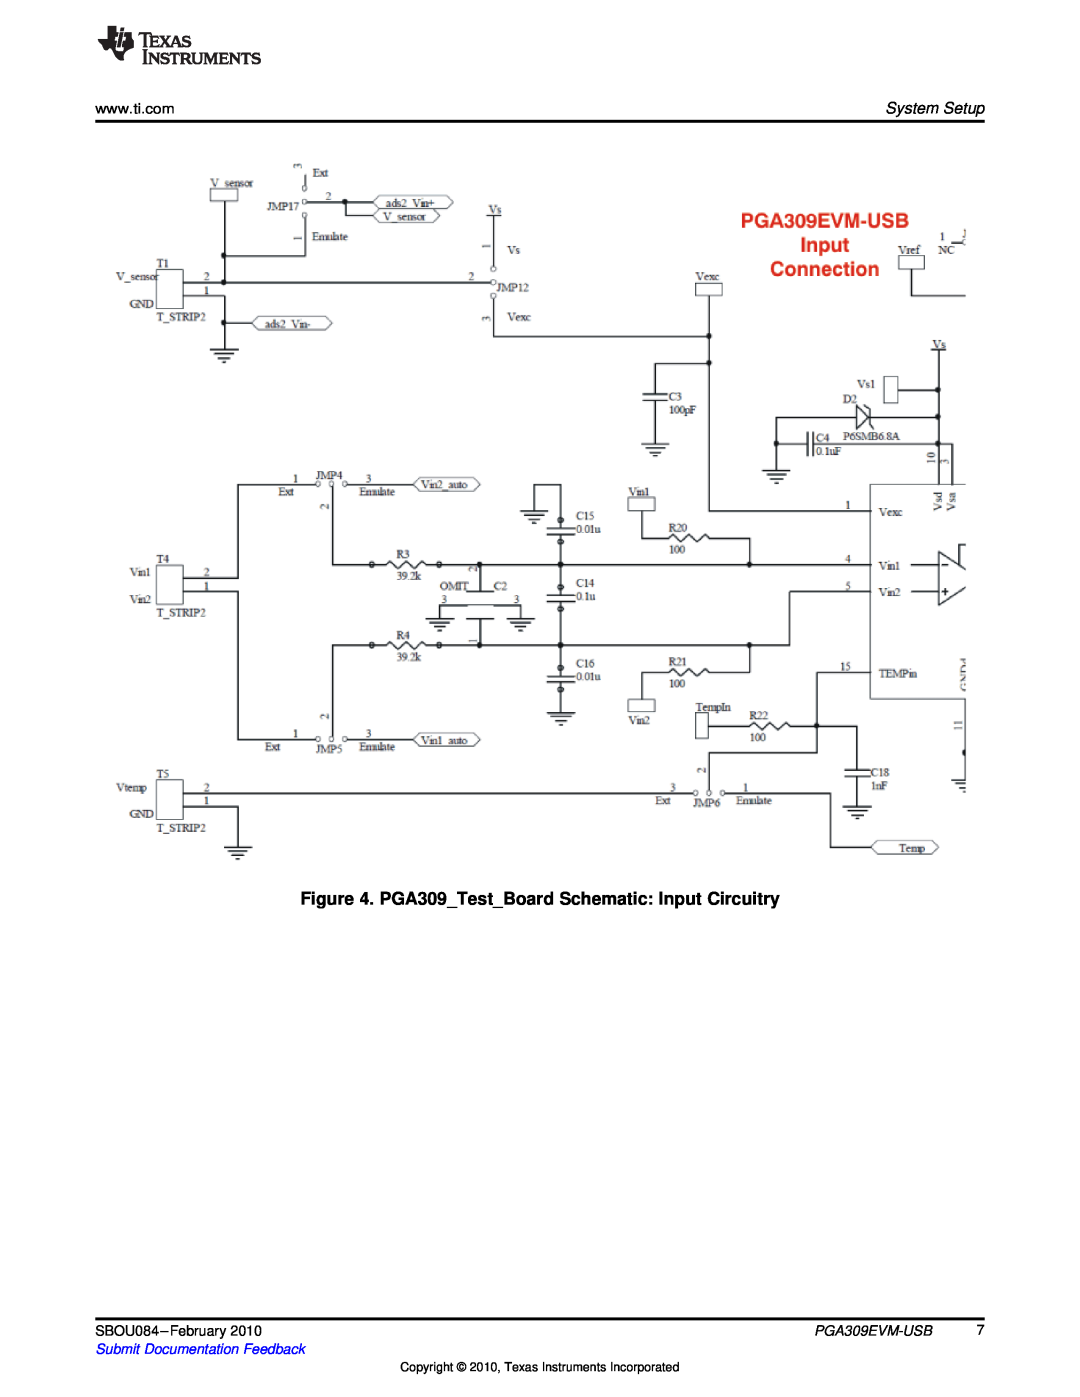 Texas Instruments PGA309EVM-USB manual PGA309TestBoard Schematic Input Circuitry, System Setup, SBOU084 -February 